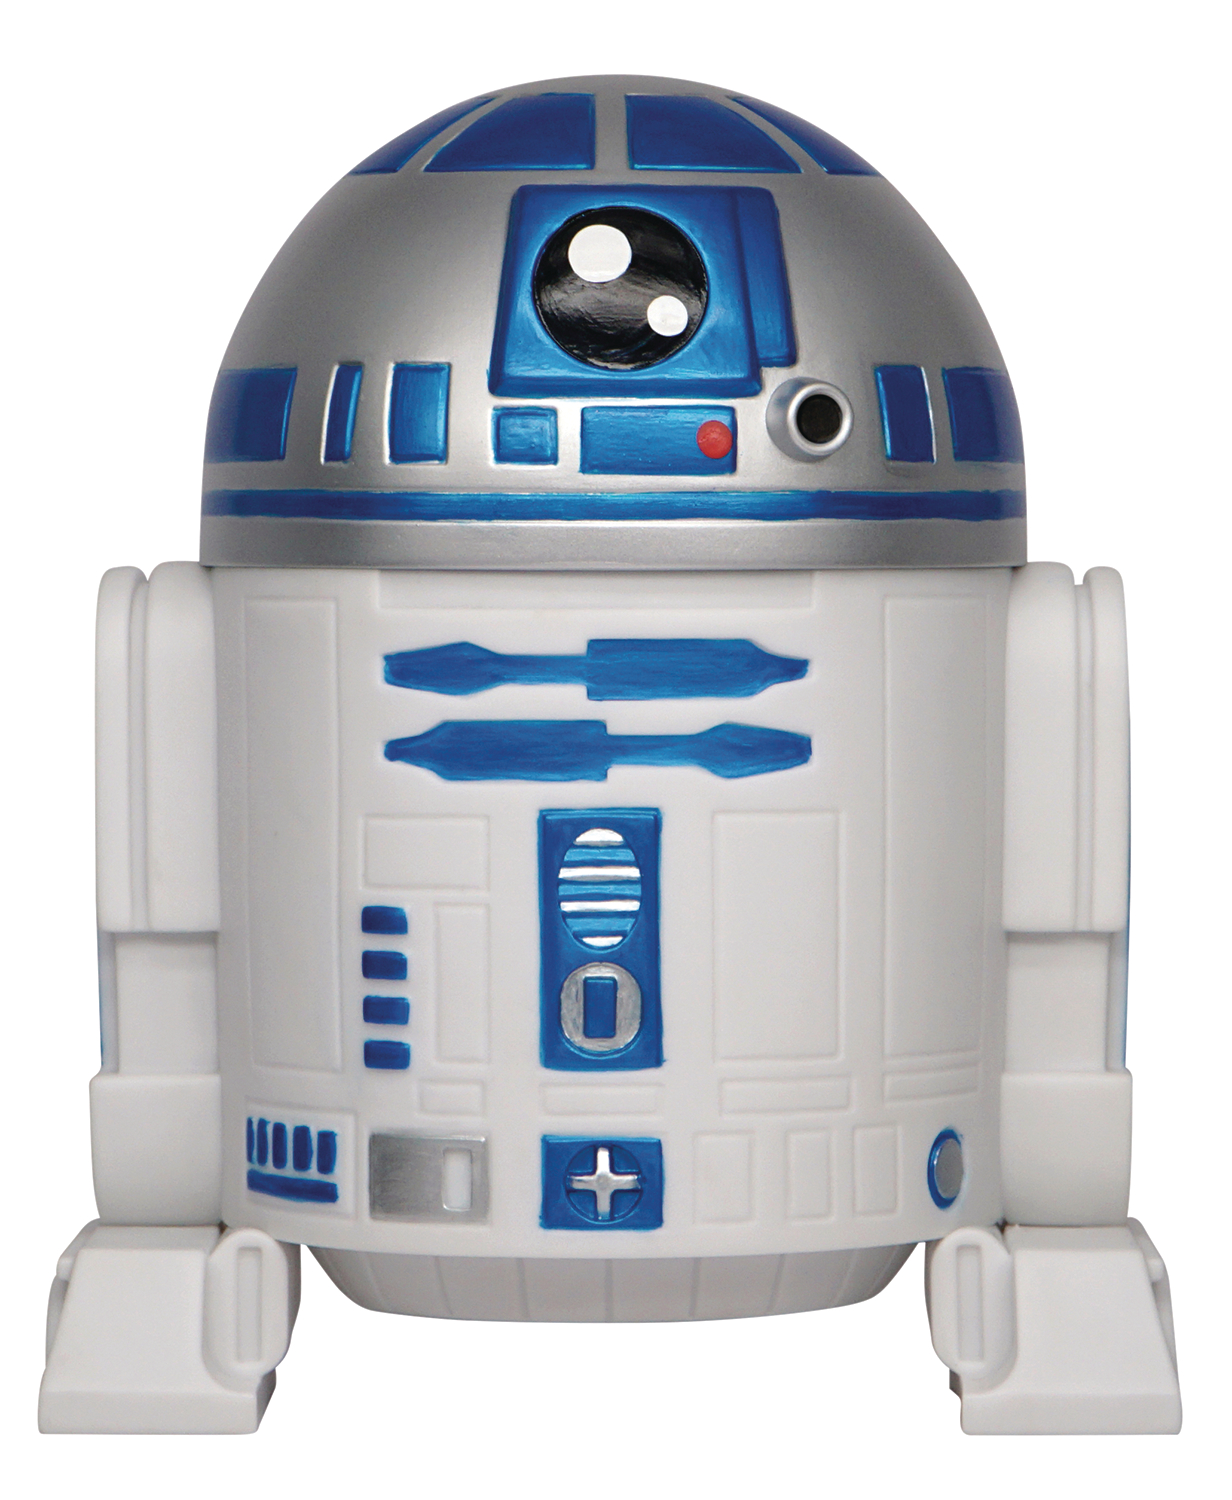 Star Wars R2-D2 PVC Bank